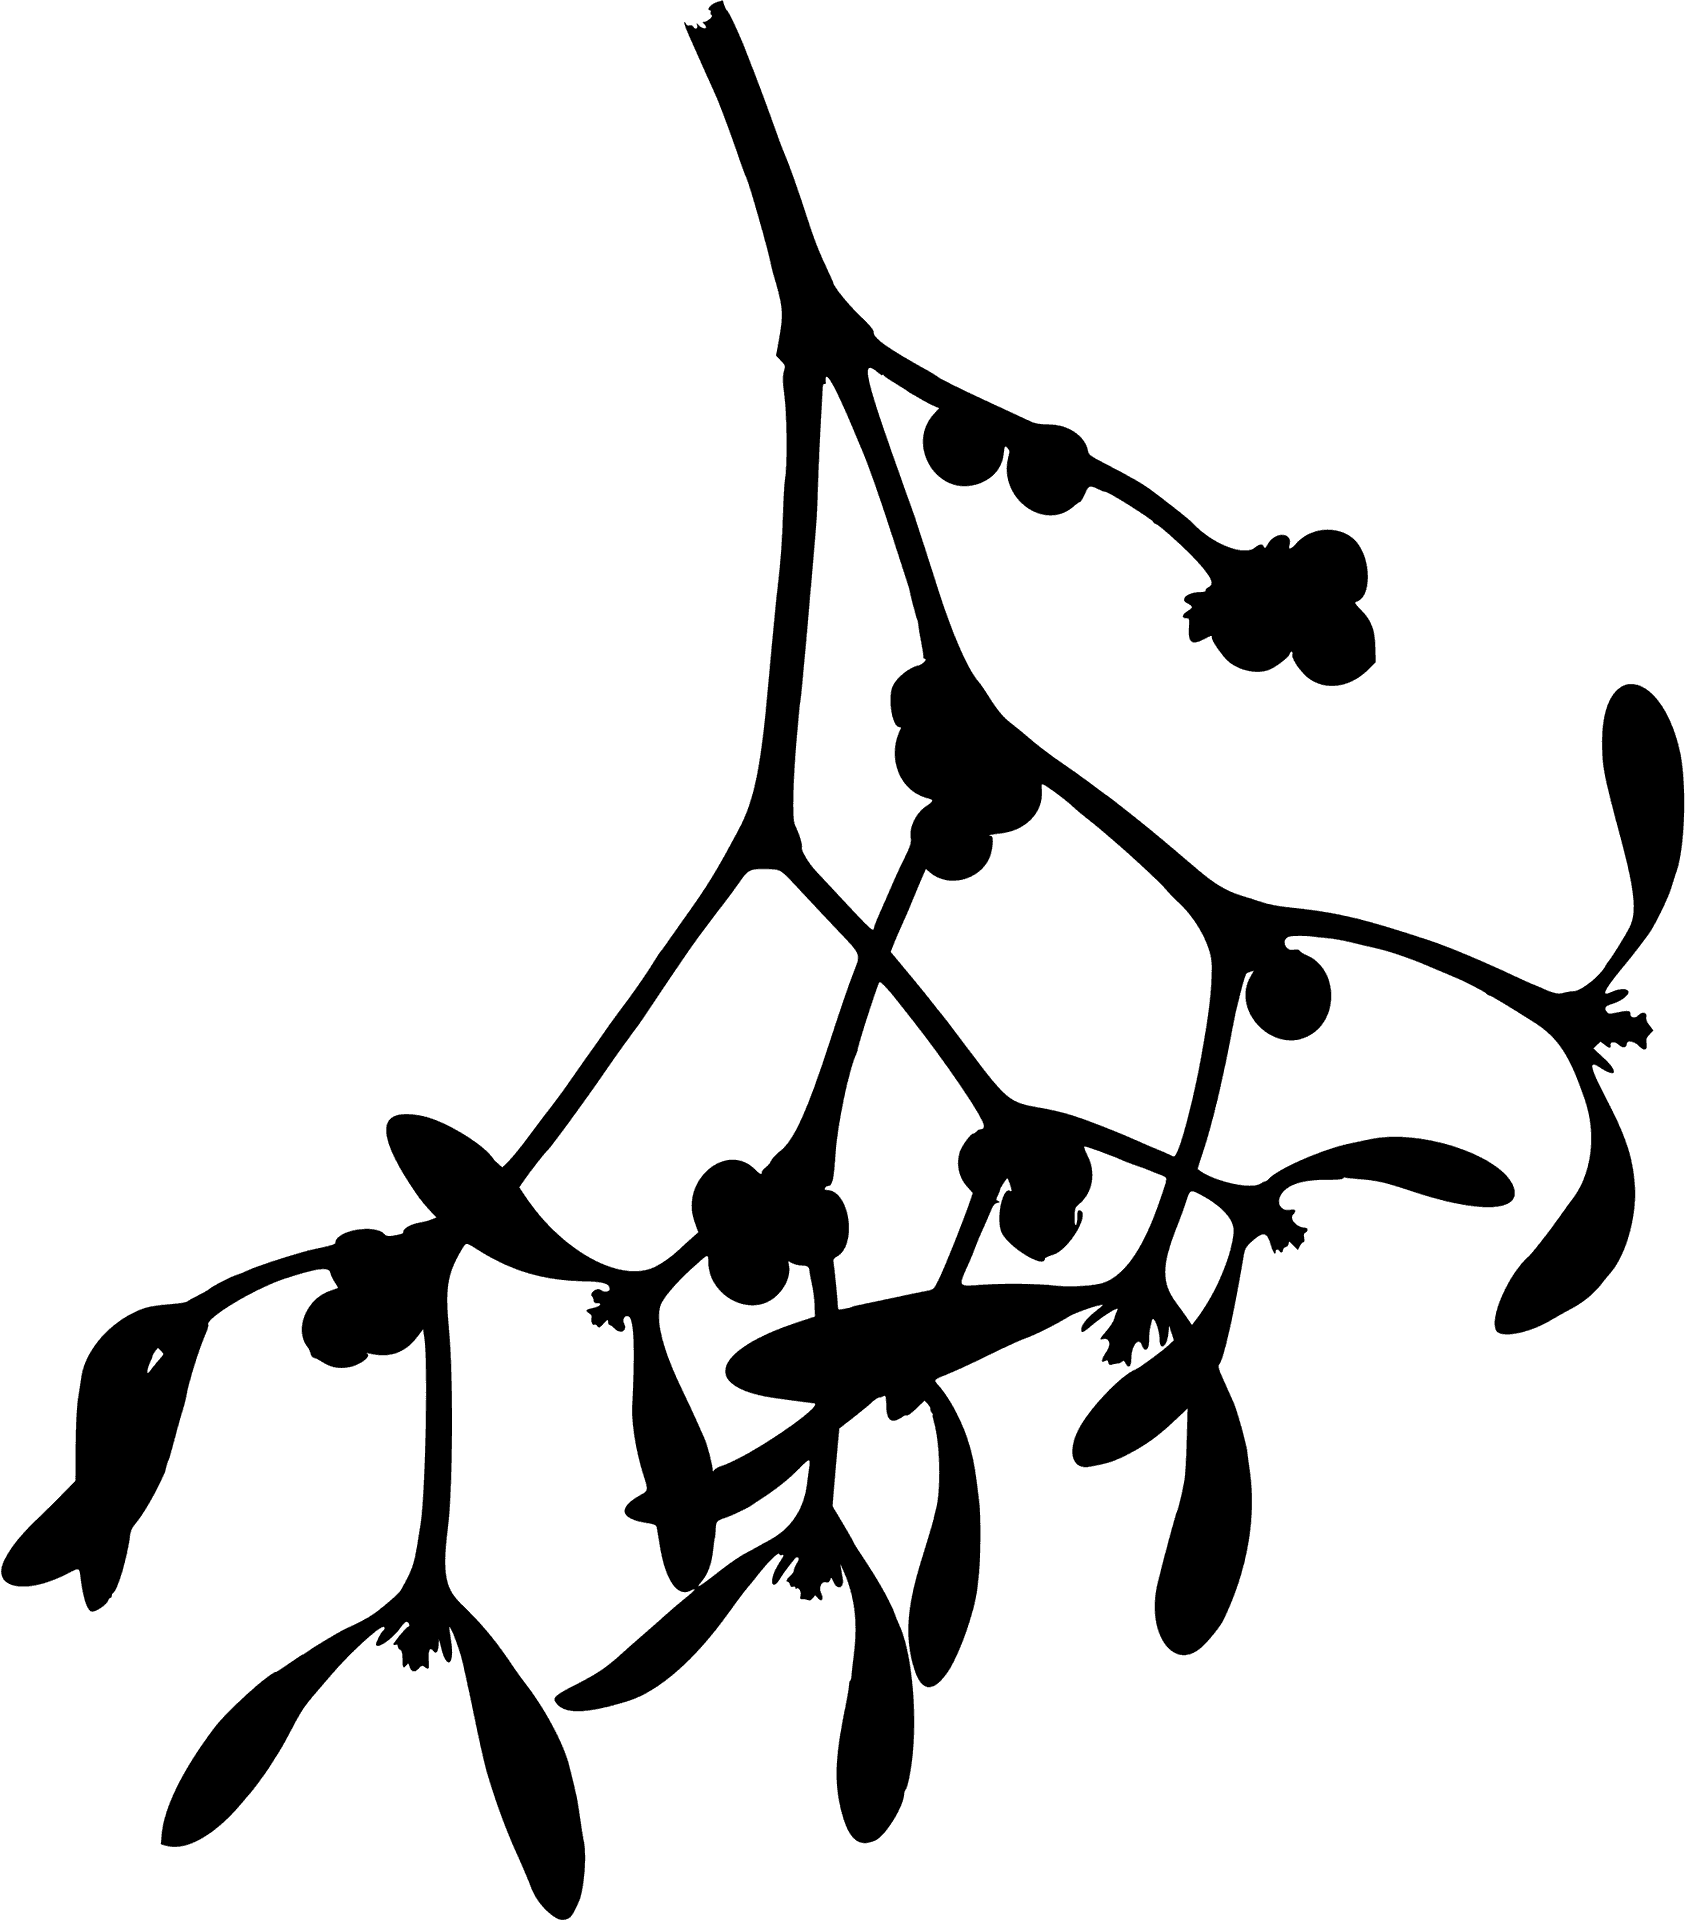 Mistletoe Silhouette Graphic PNG